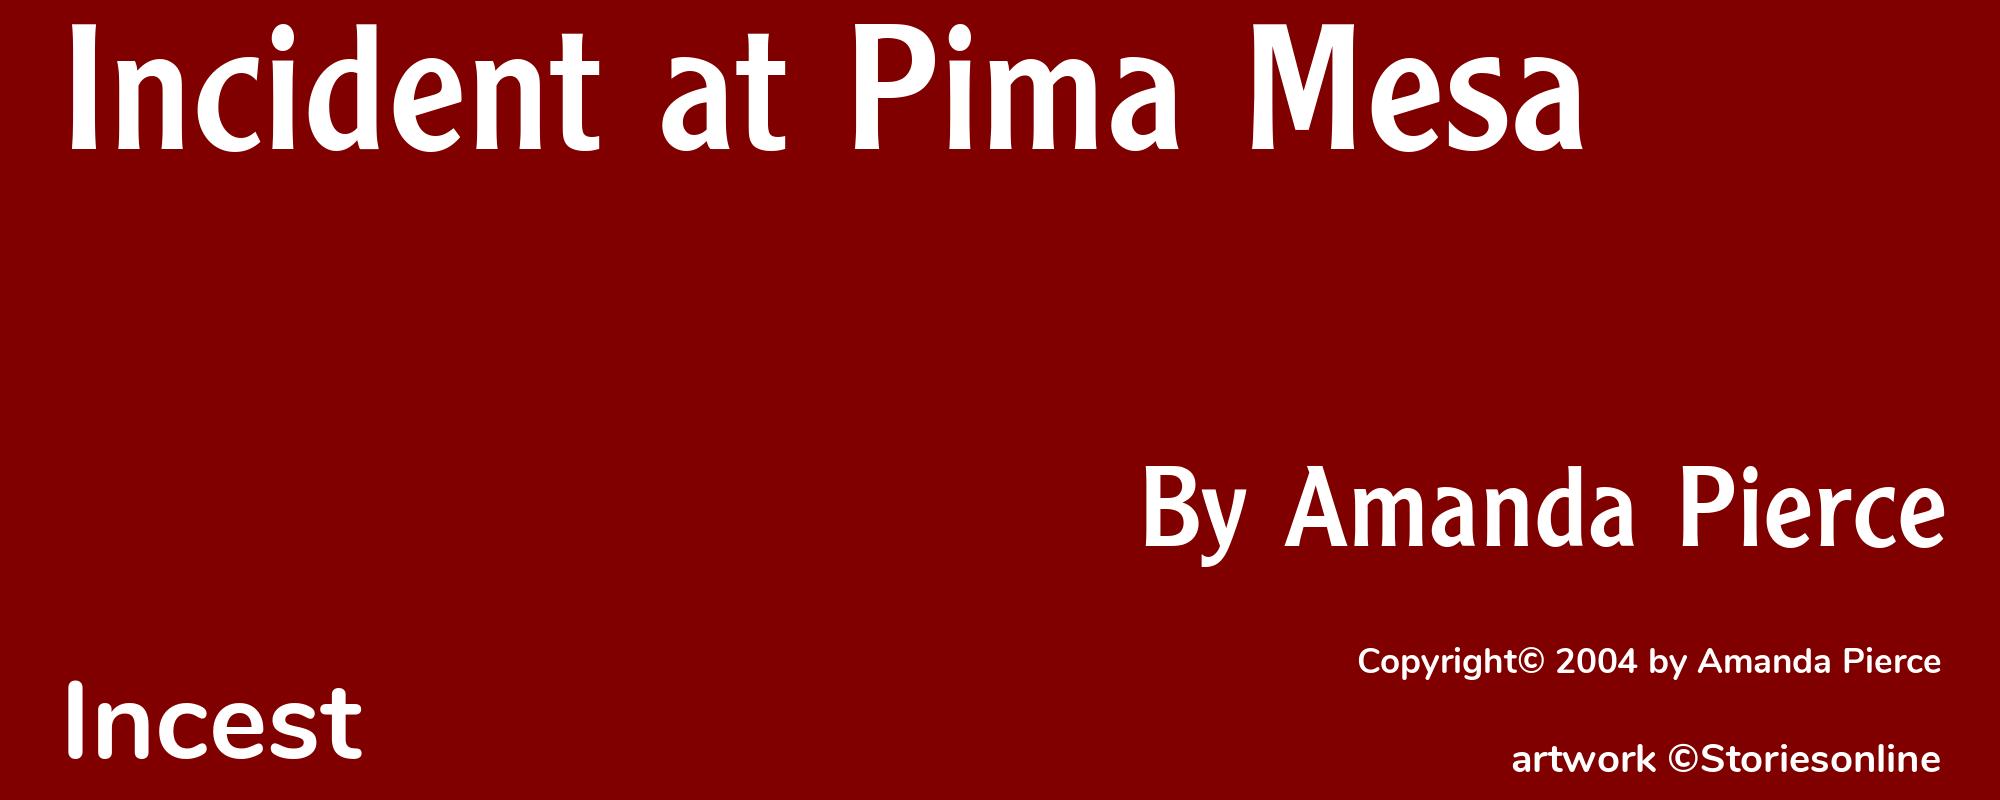 Incident at Pima Mesa - Cover